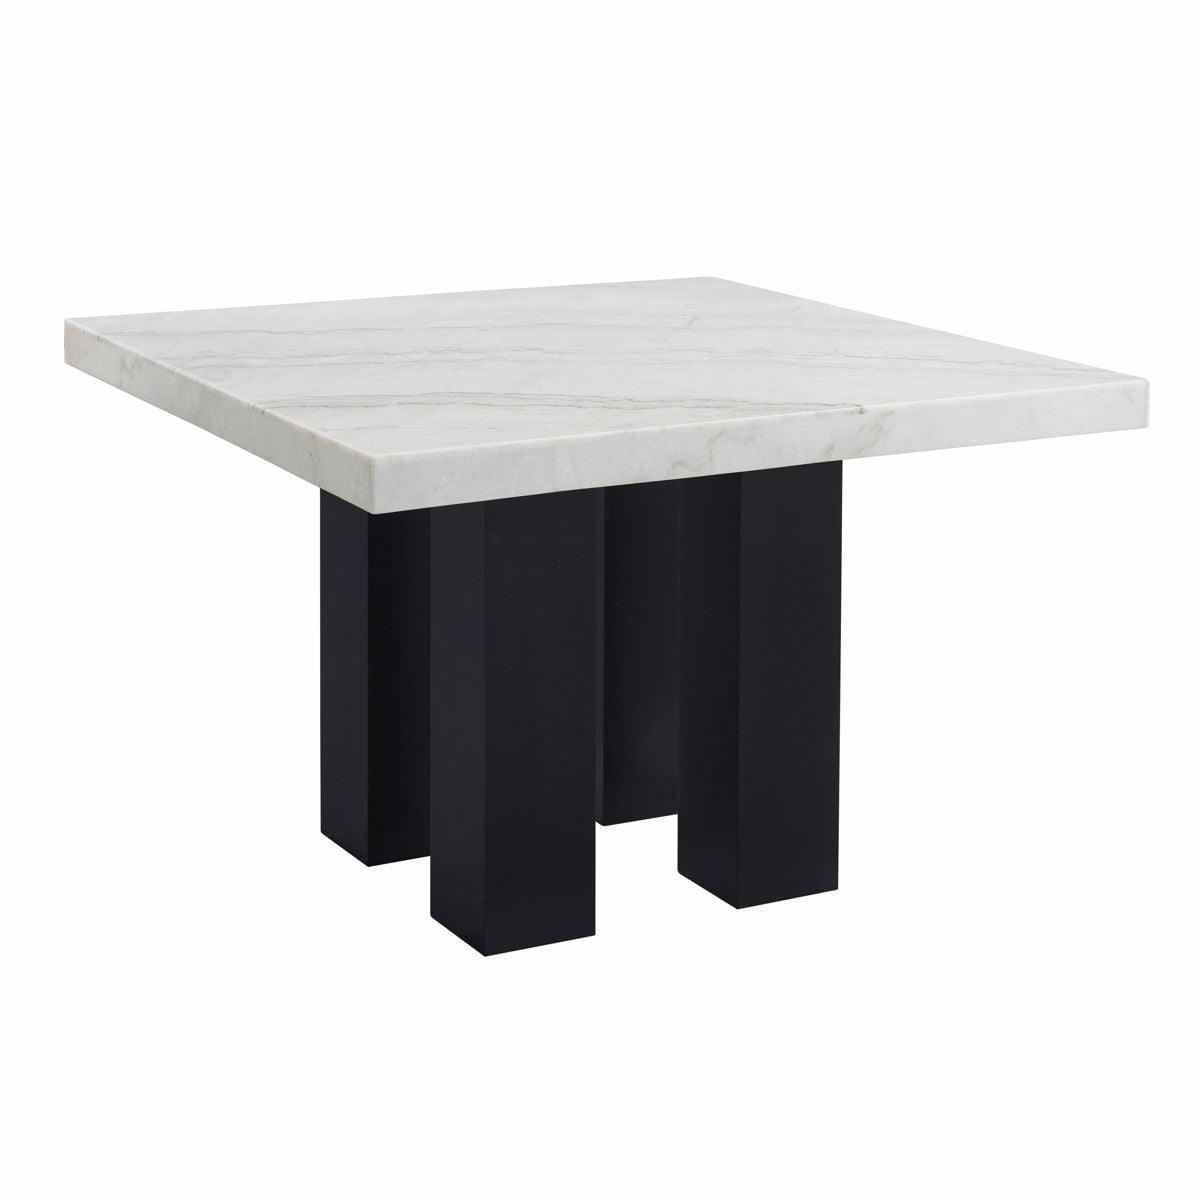 Steve Silver Furniture - Camilla - Square Dining Table - White - 5th Avenue Furniture